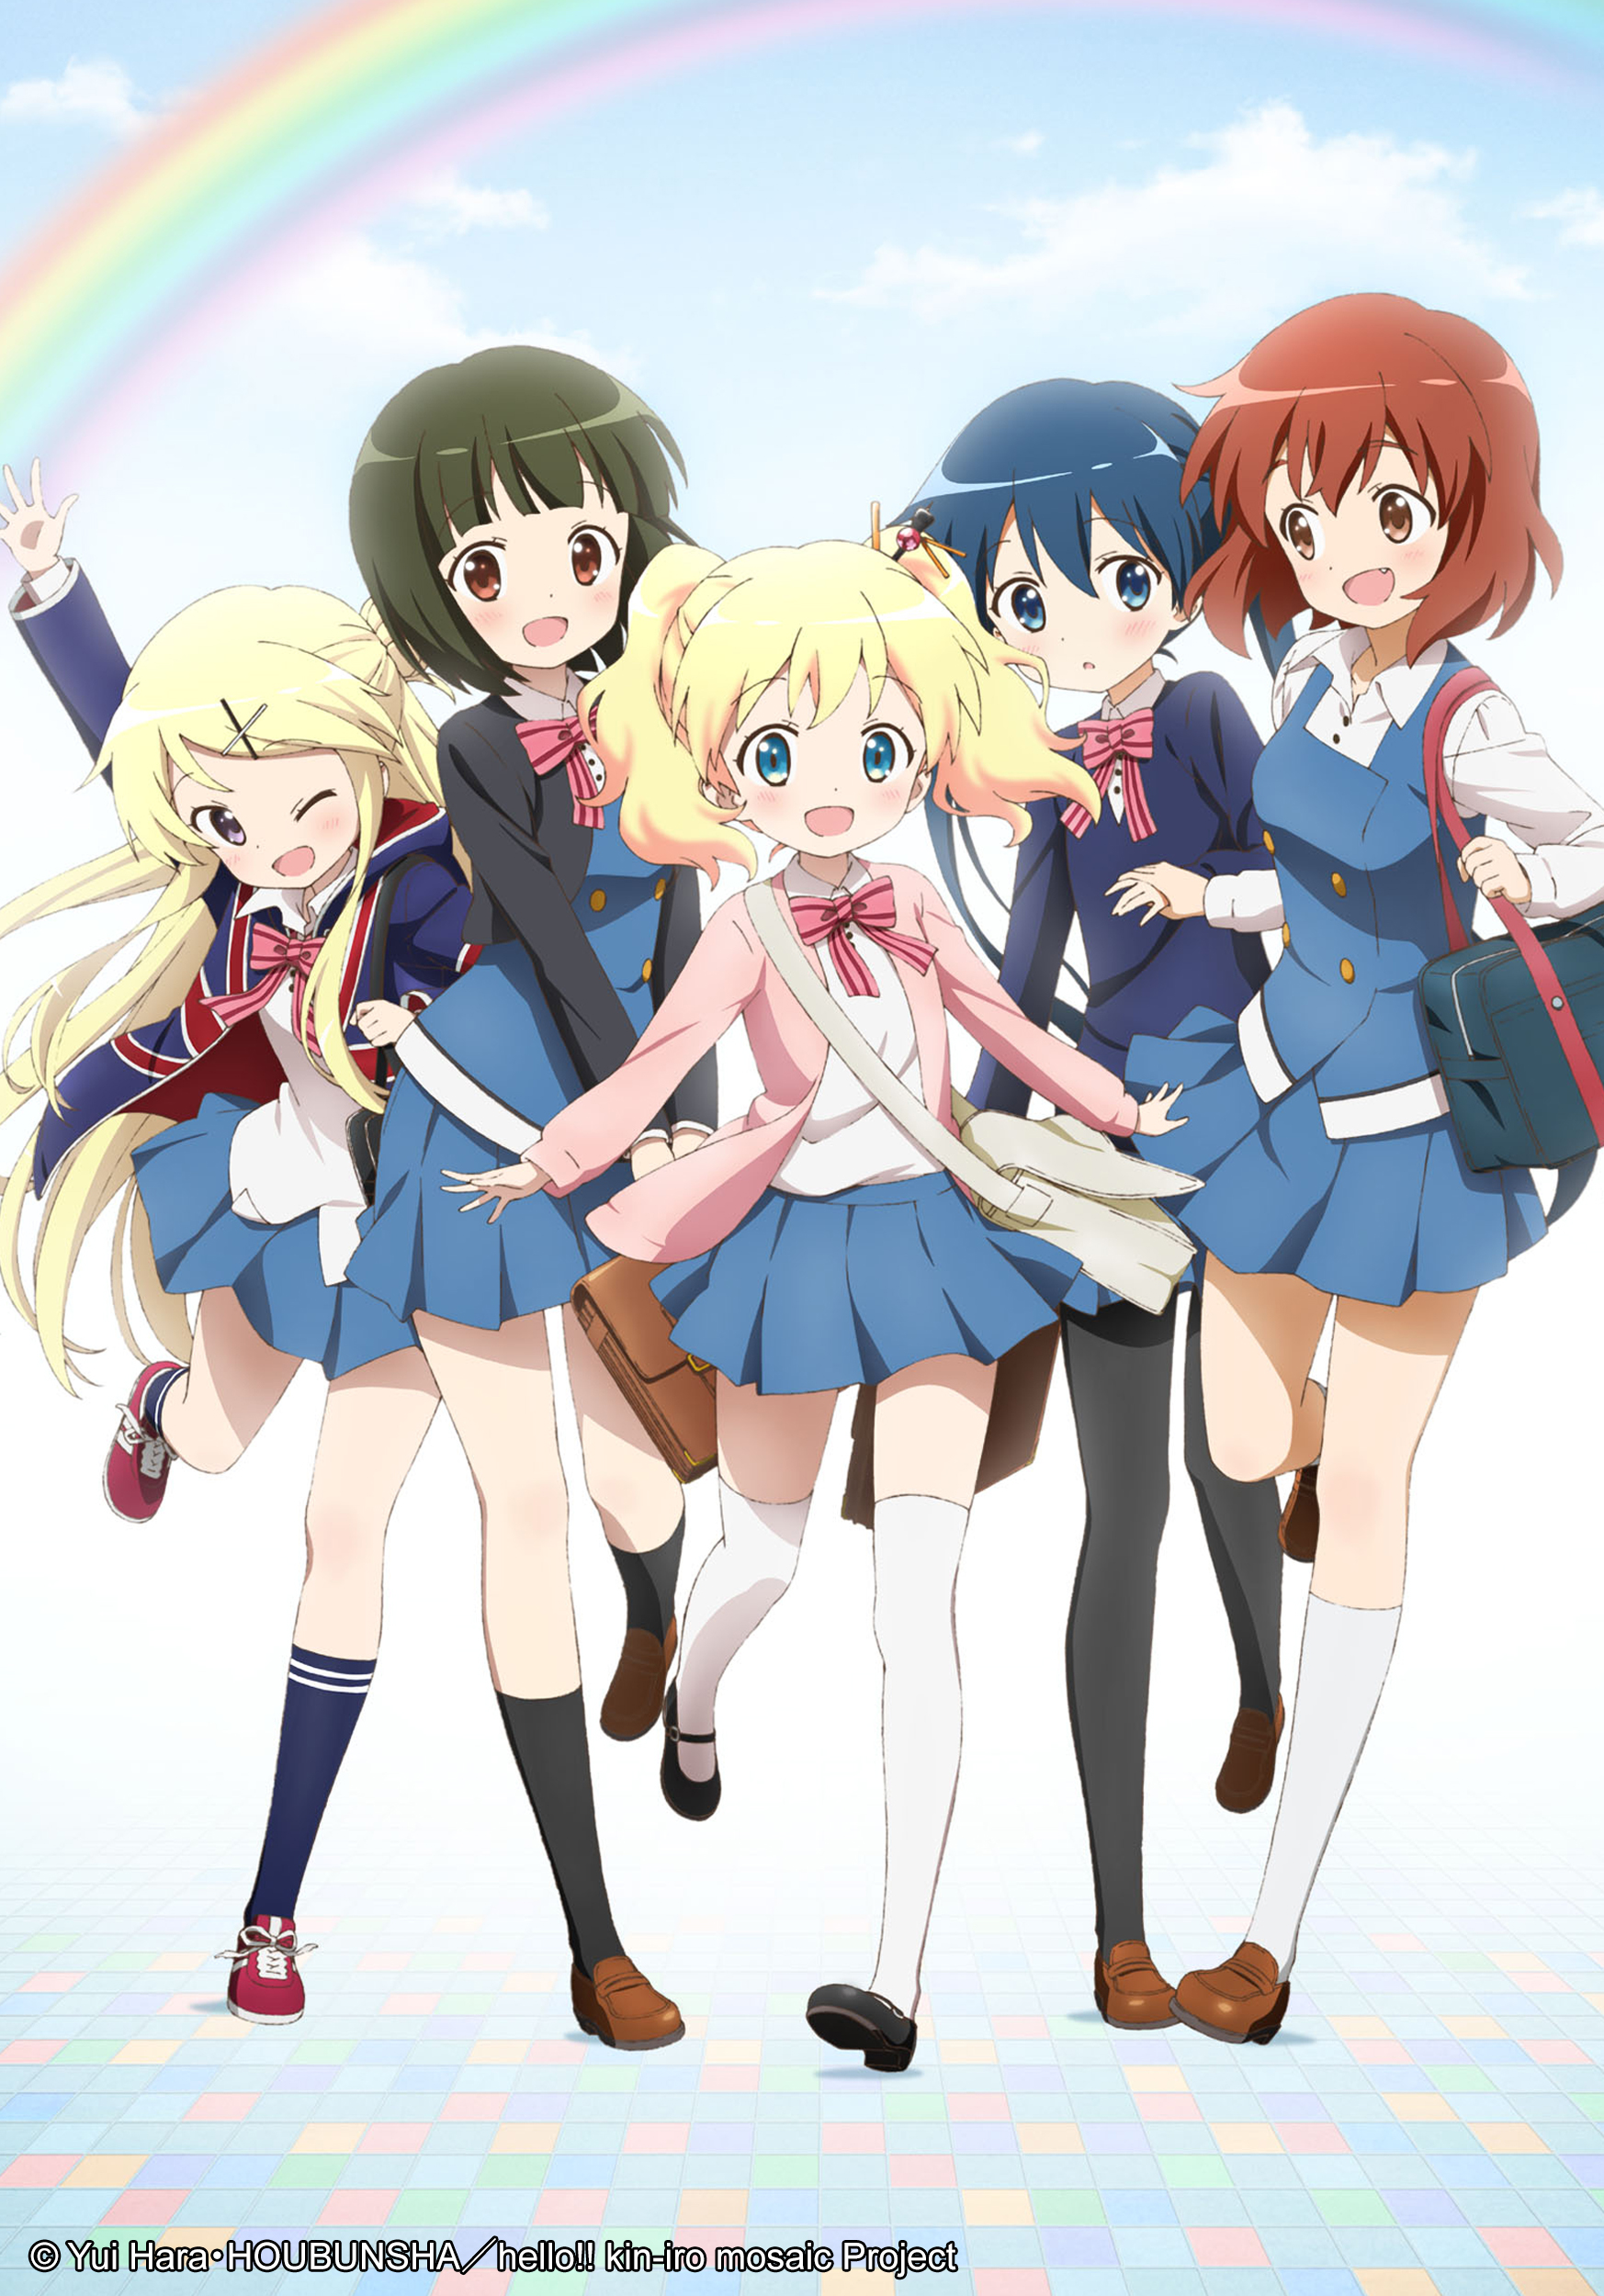 Animax Asia Premieres Classroom of the Elite Anime on November 20 - News -  Anime News Network